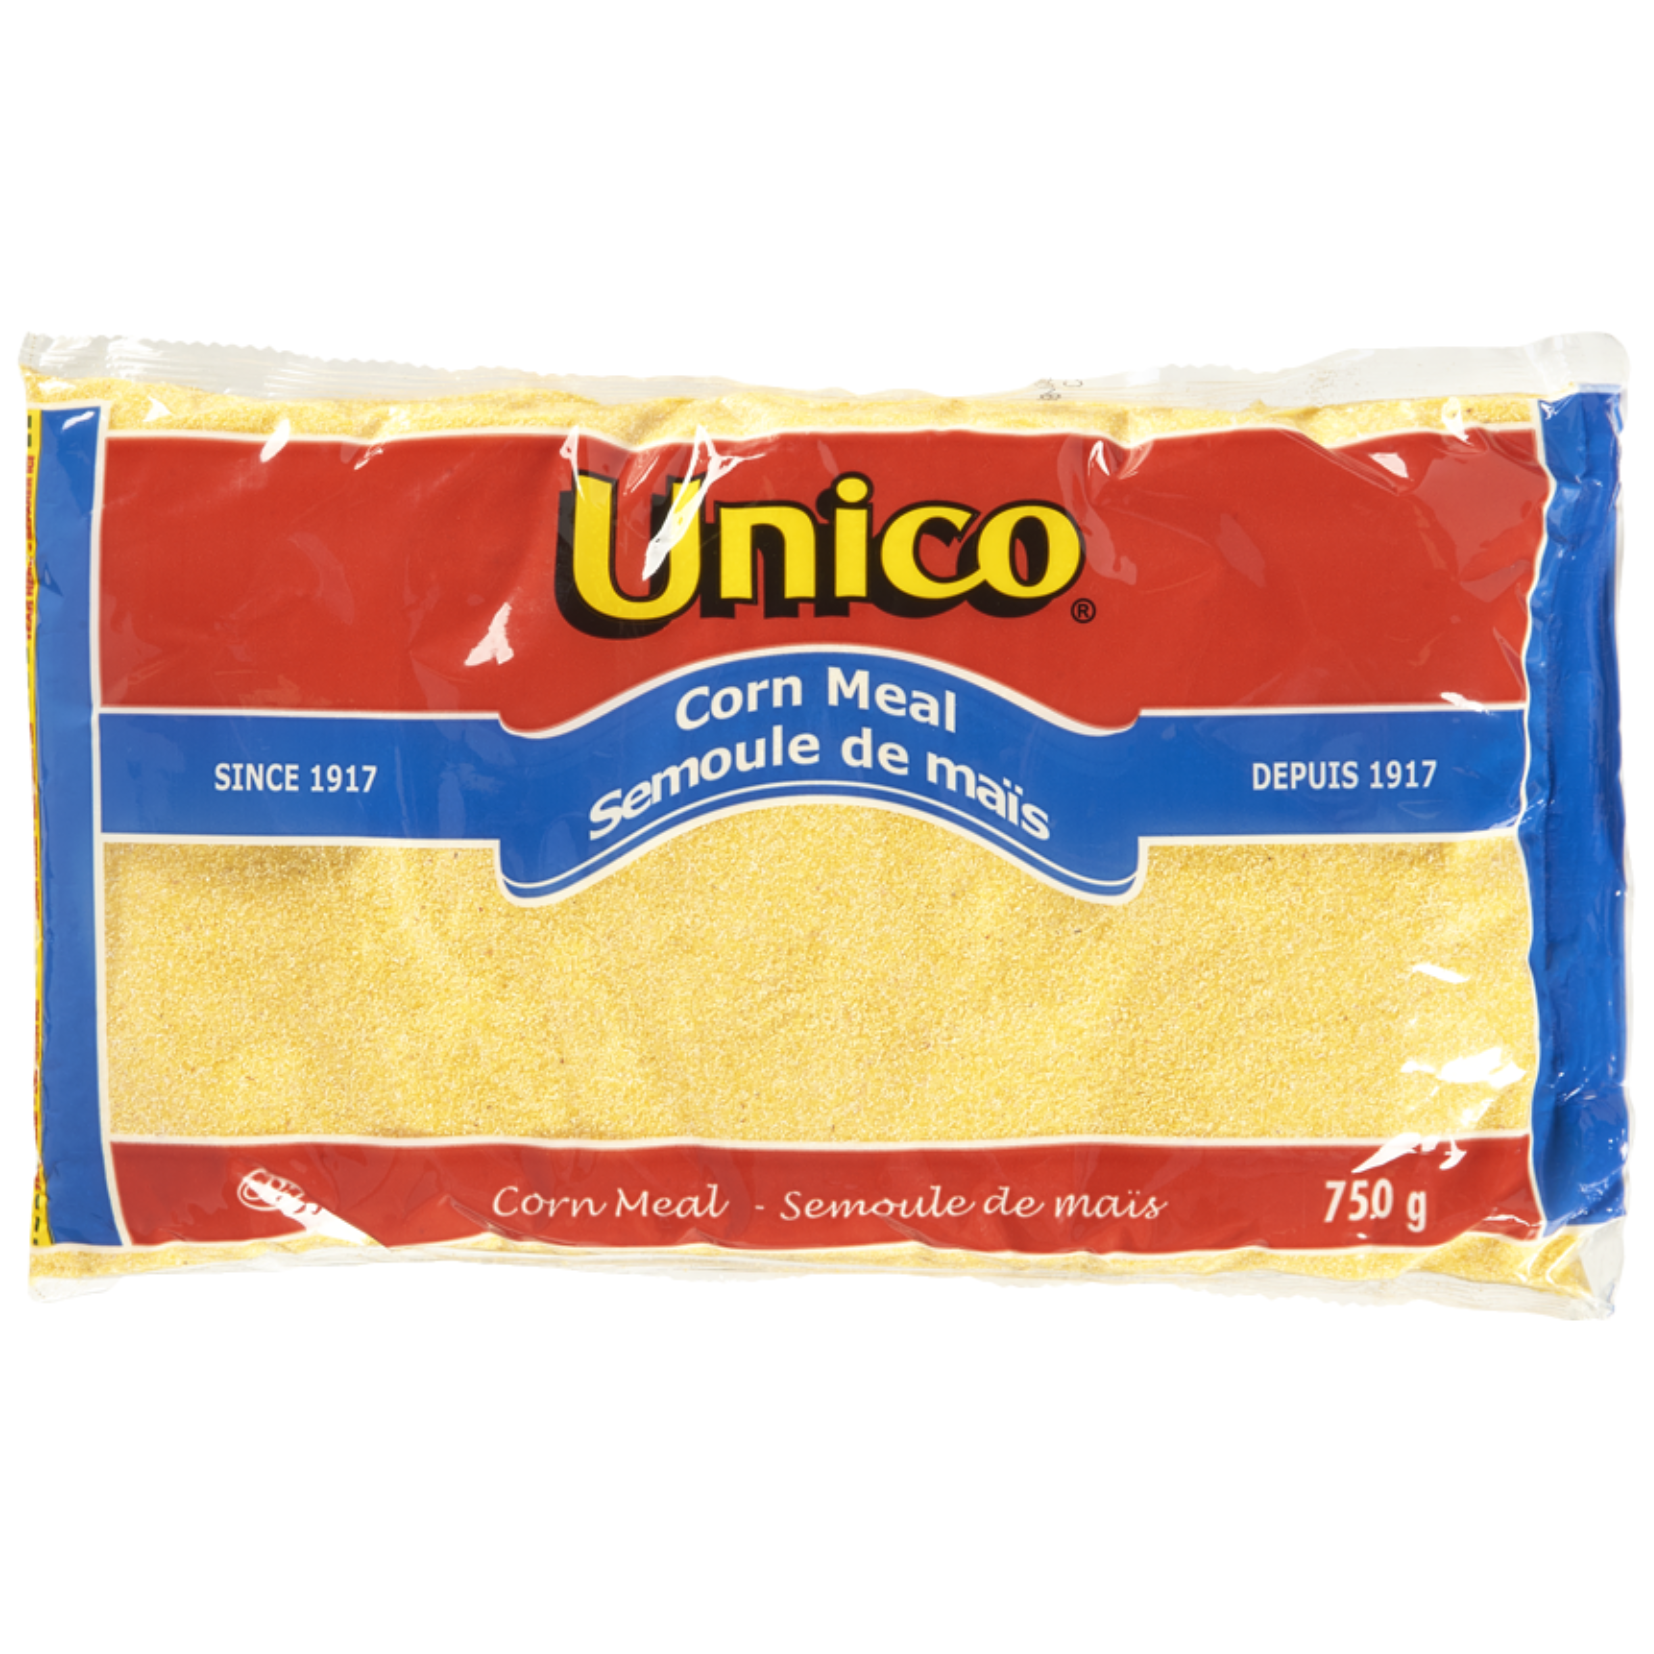 Unico Corn Meal 750g